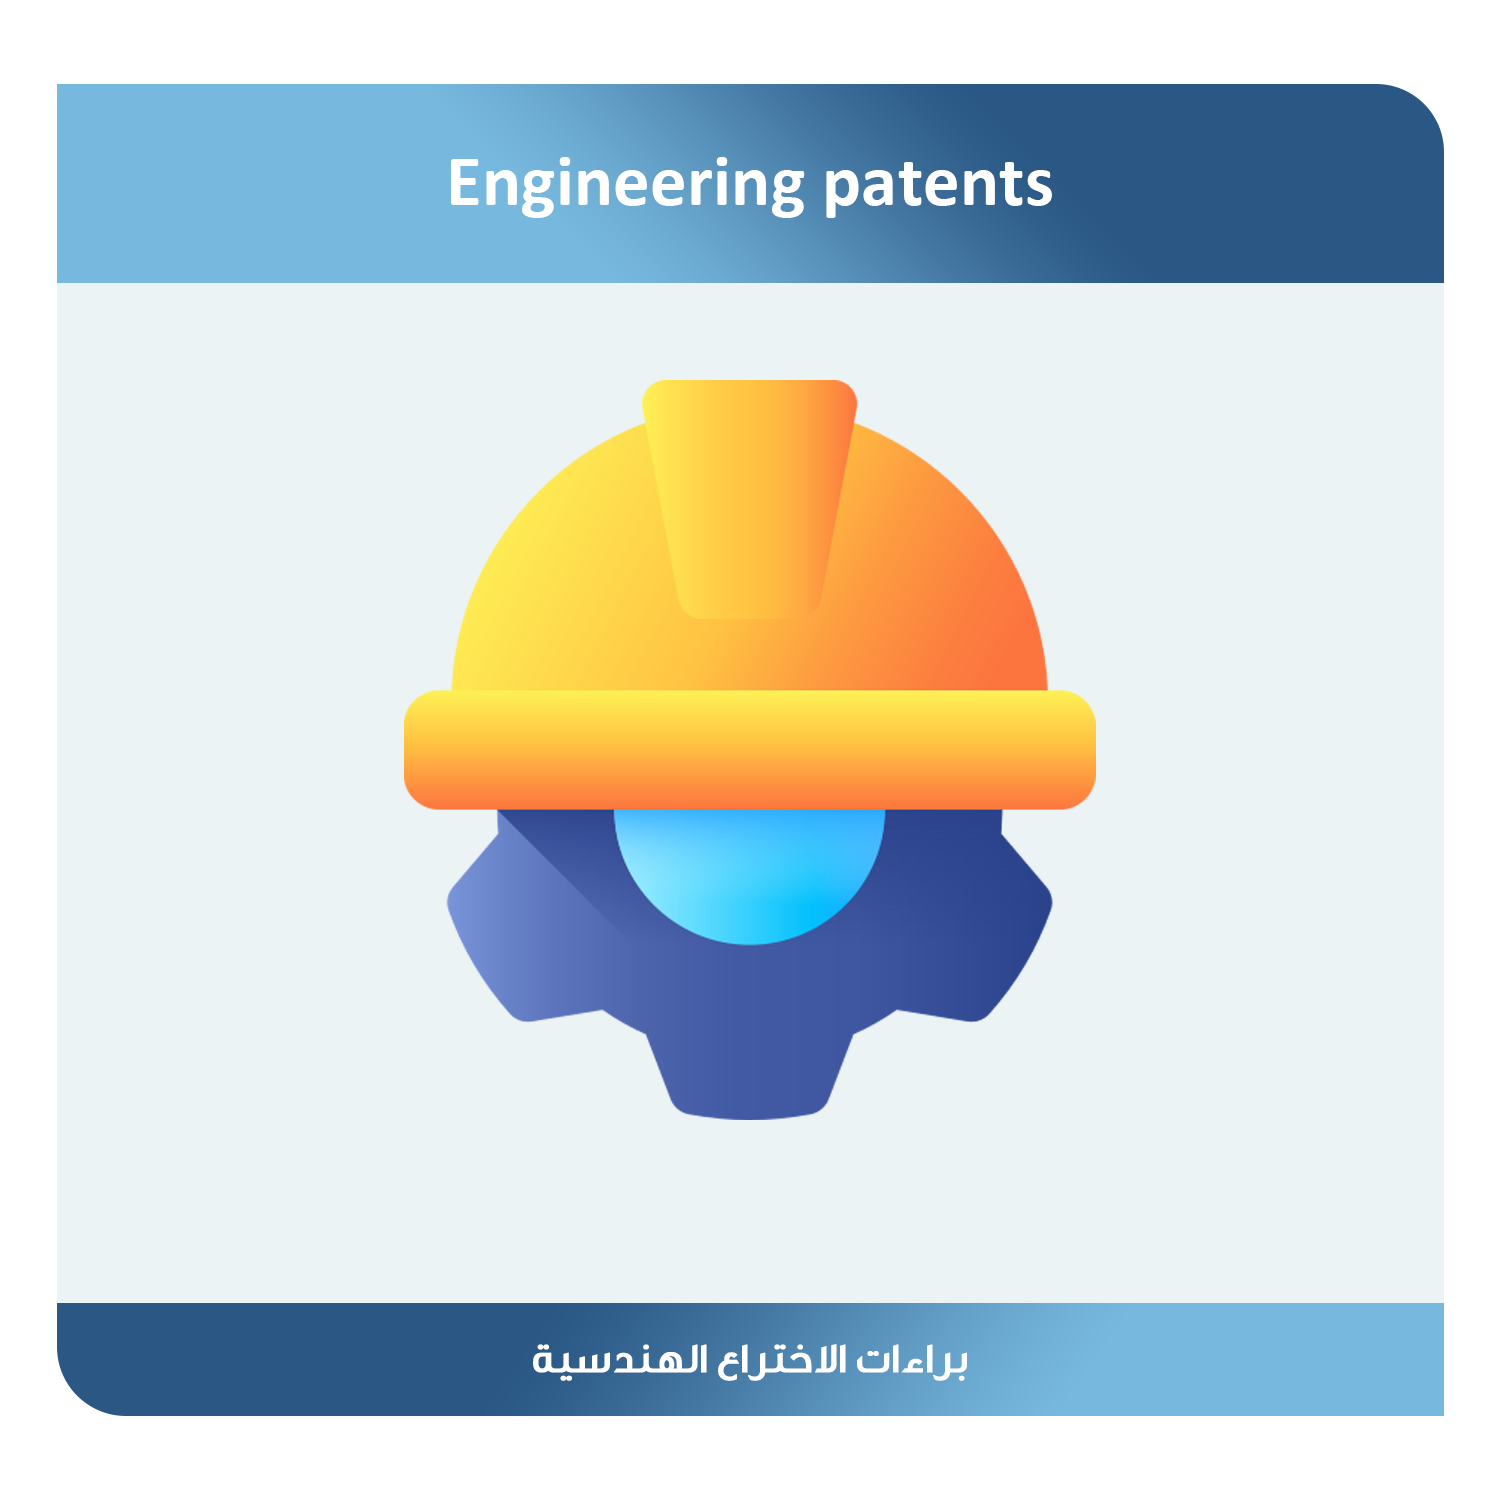 Engineering patents